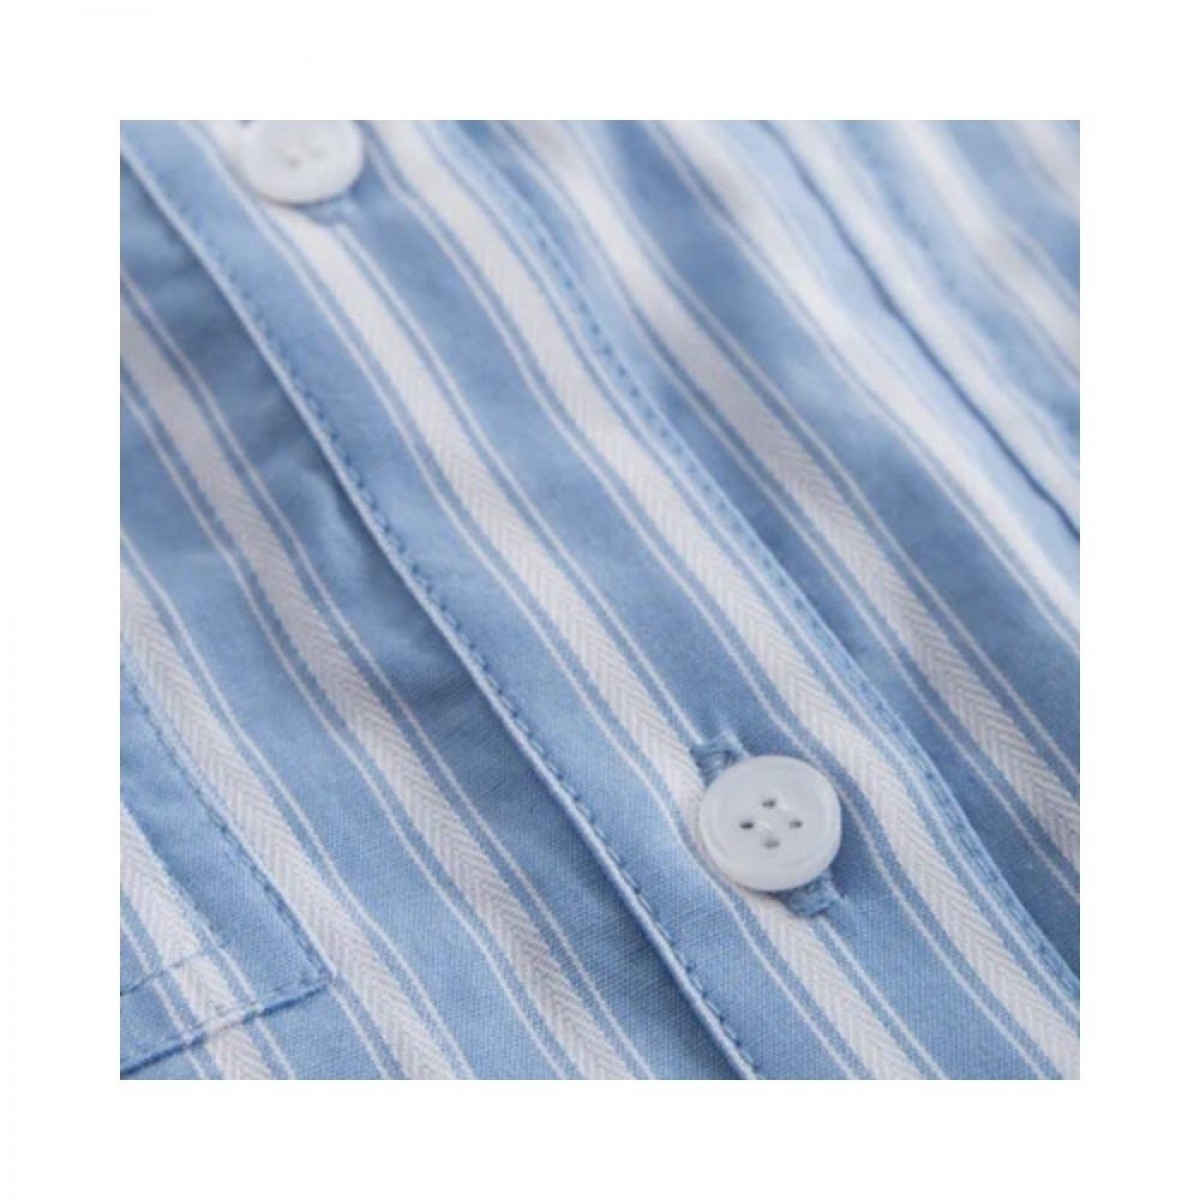 veneda shirt - clear blue - knapper